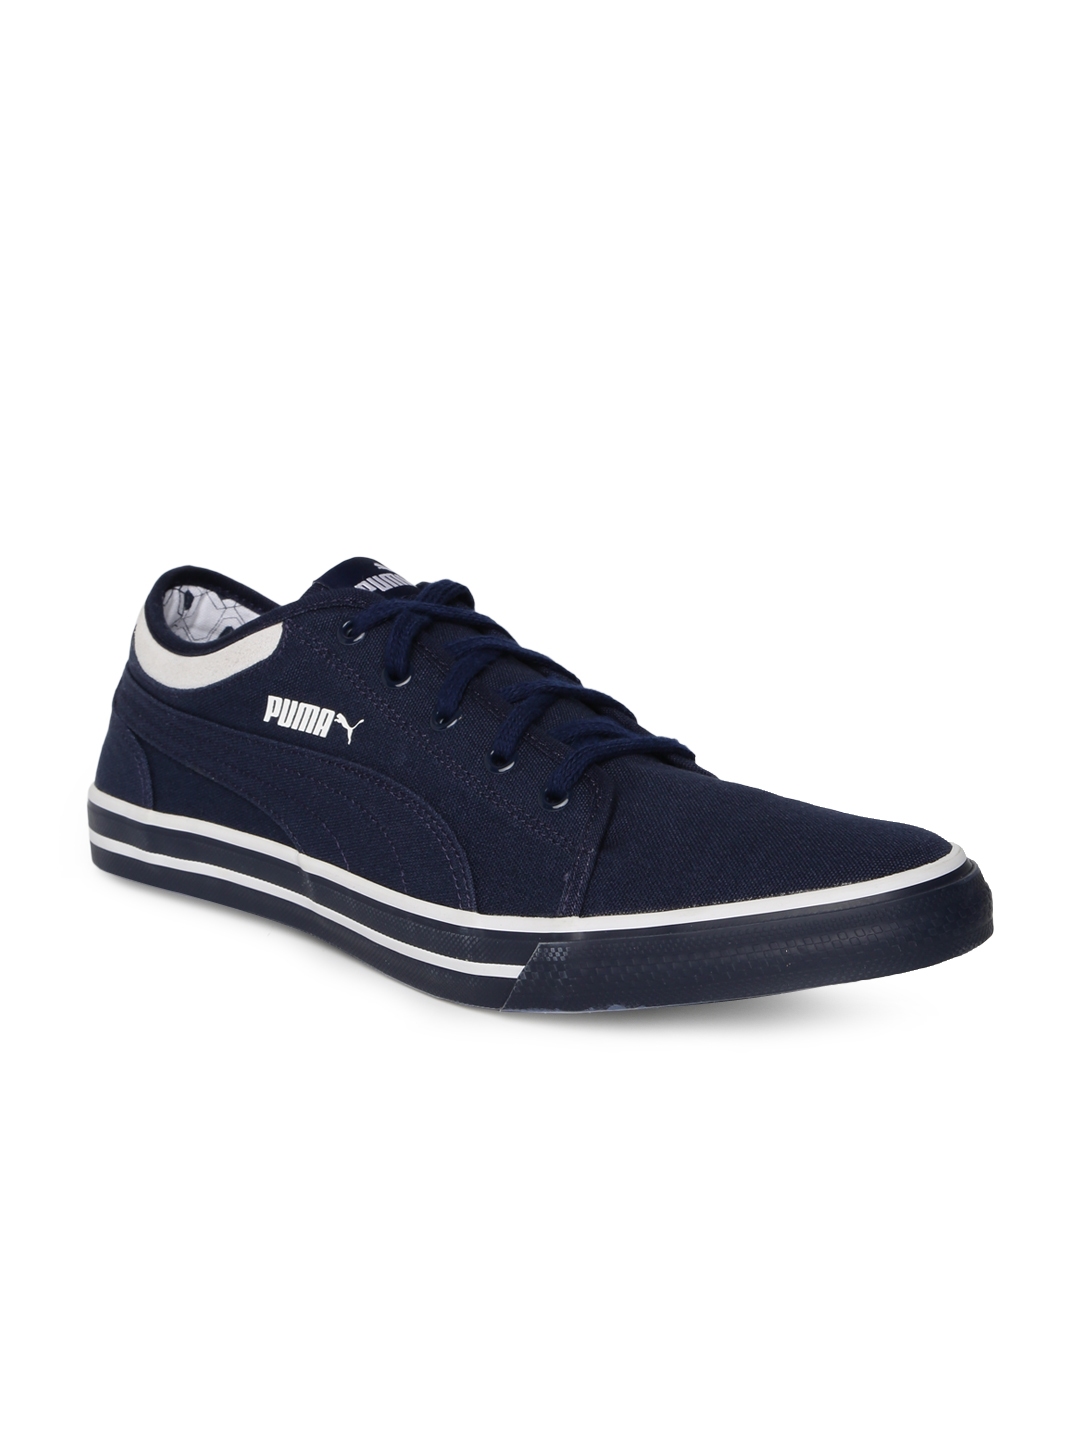 Buy Puma Men Navy Blue Yale Gum 2 Sneakers - Casual Shoes for Men ...